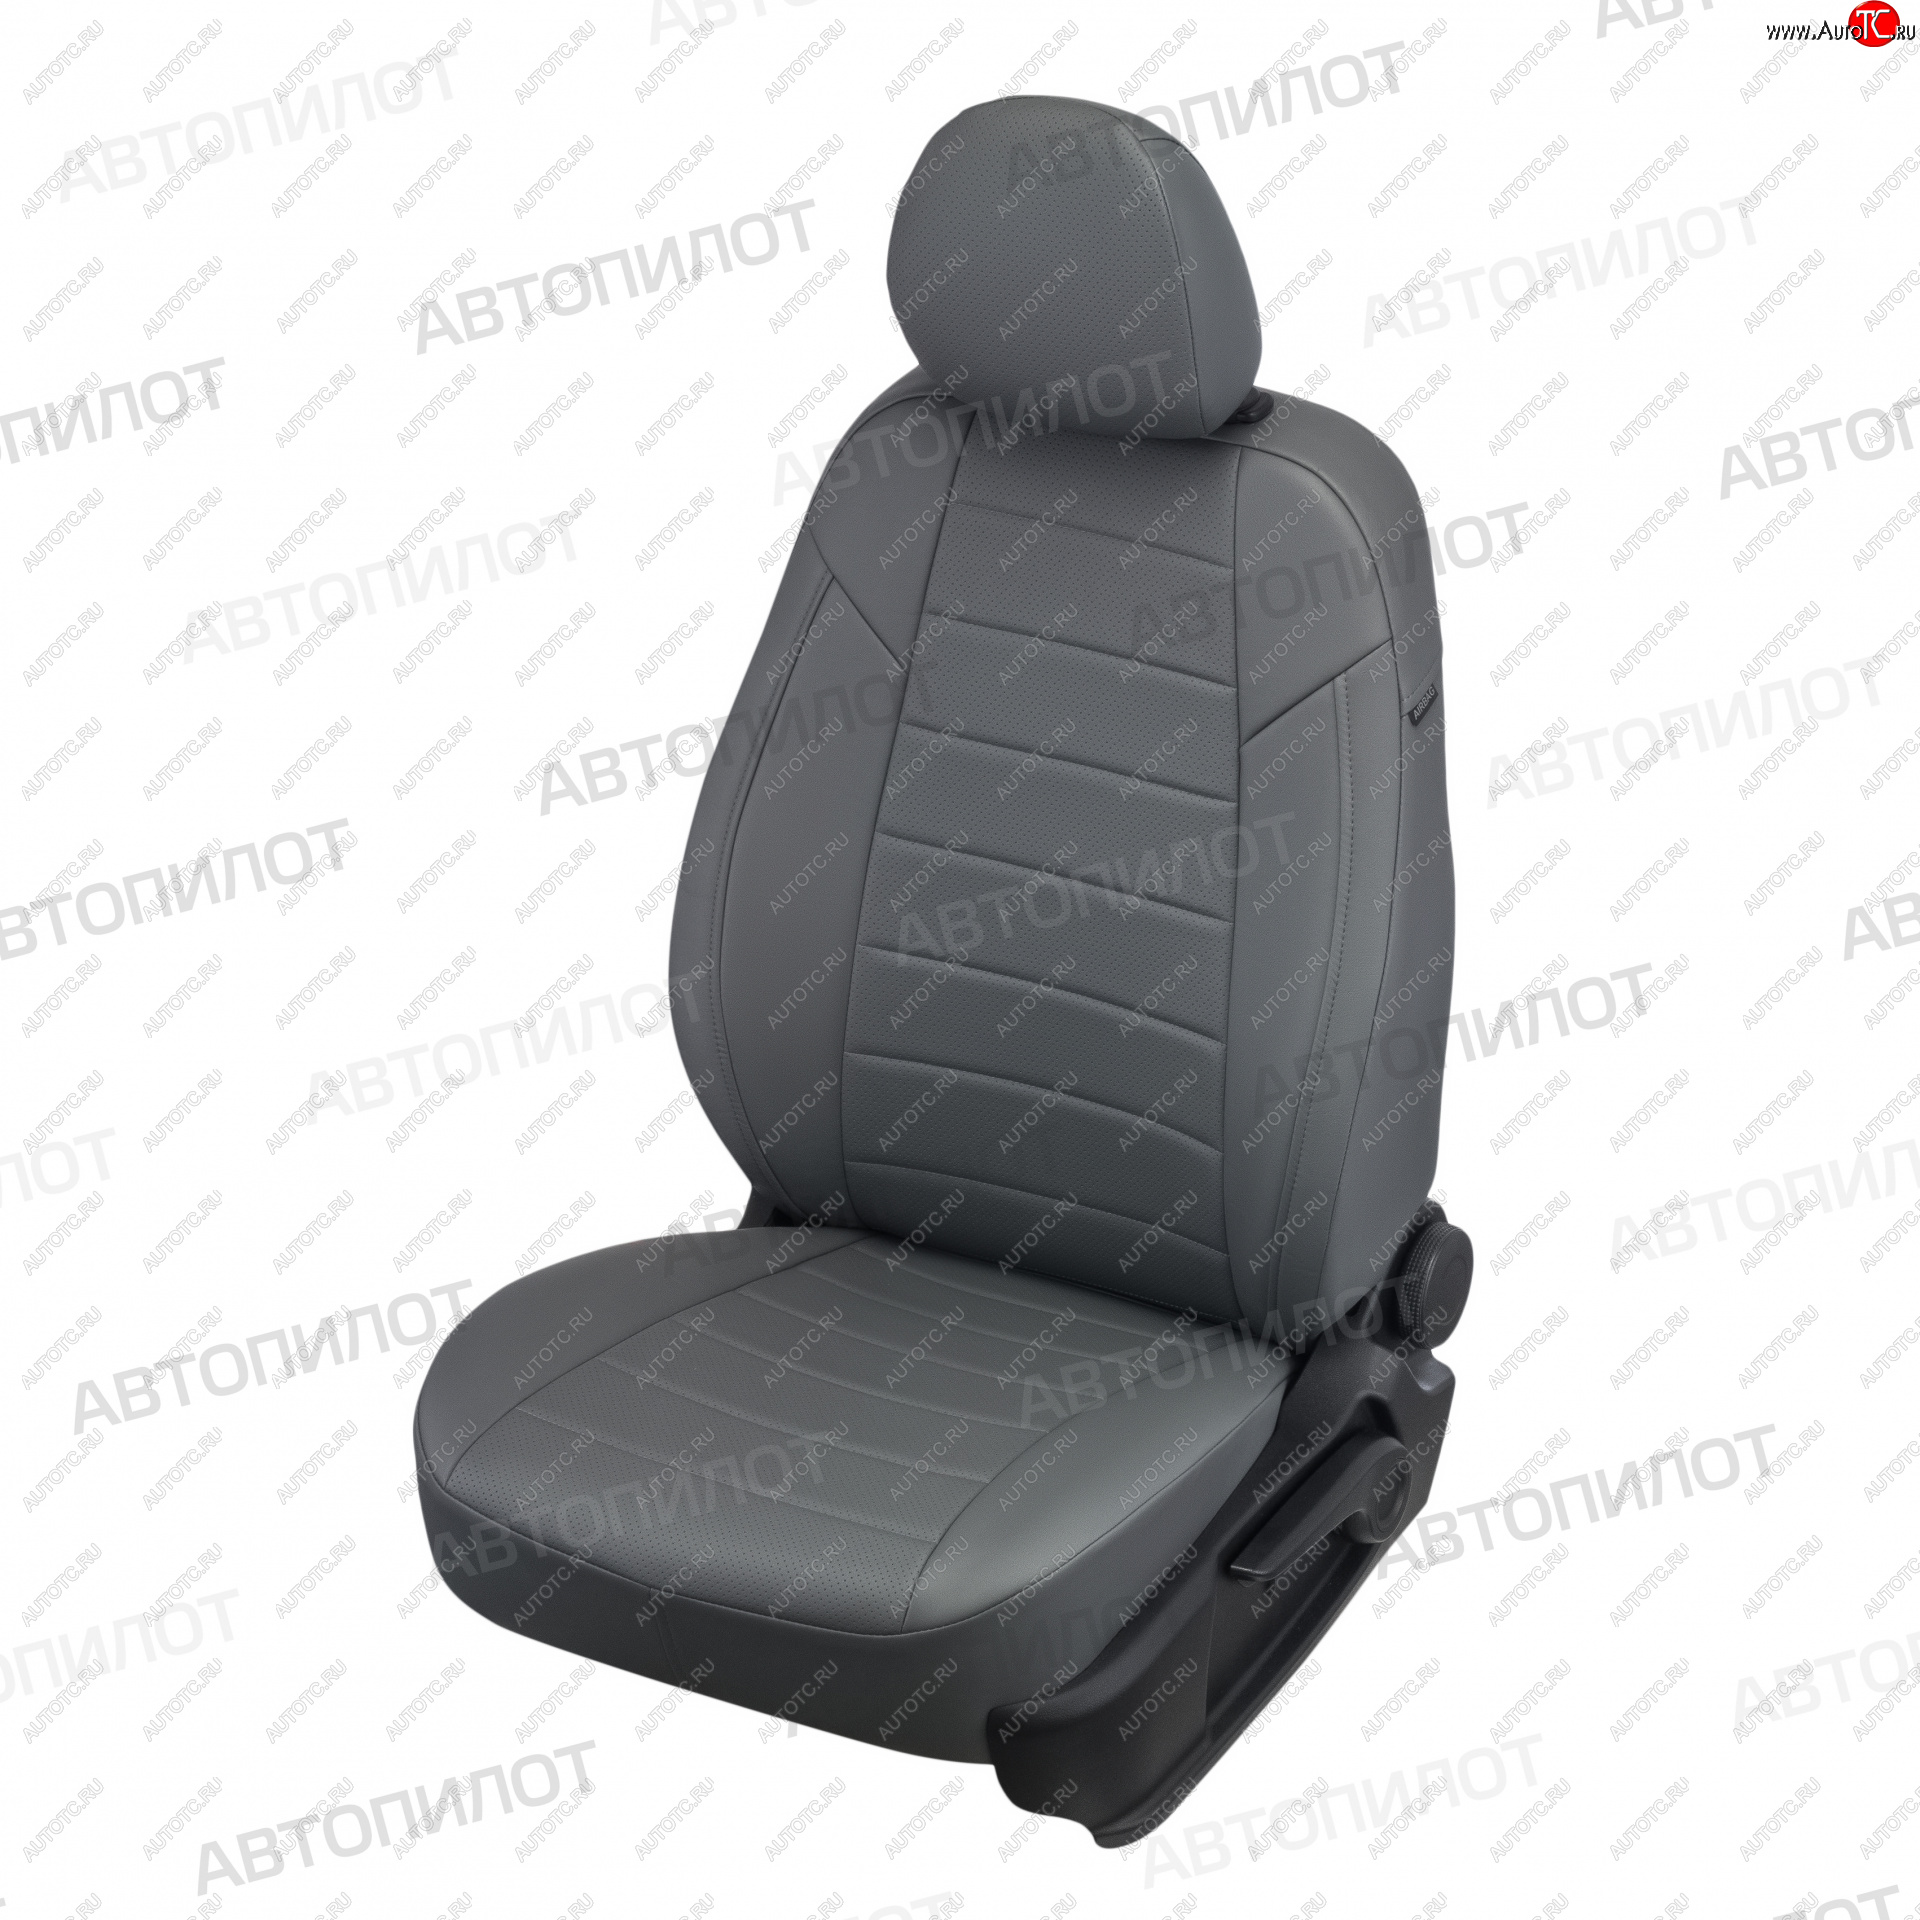 13 449 р. Чехлы сидений (экокожа, 40/60) Автопилот  Volkswagen Polo  9N1 (2001-2009) (серый)